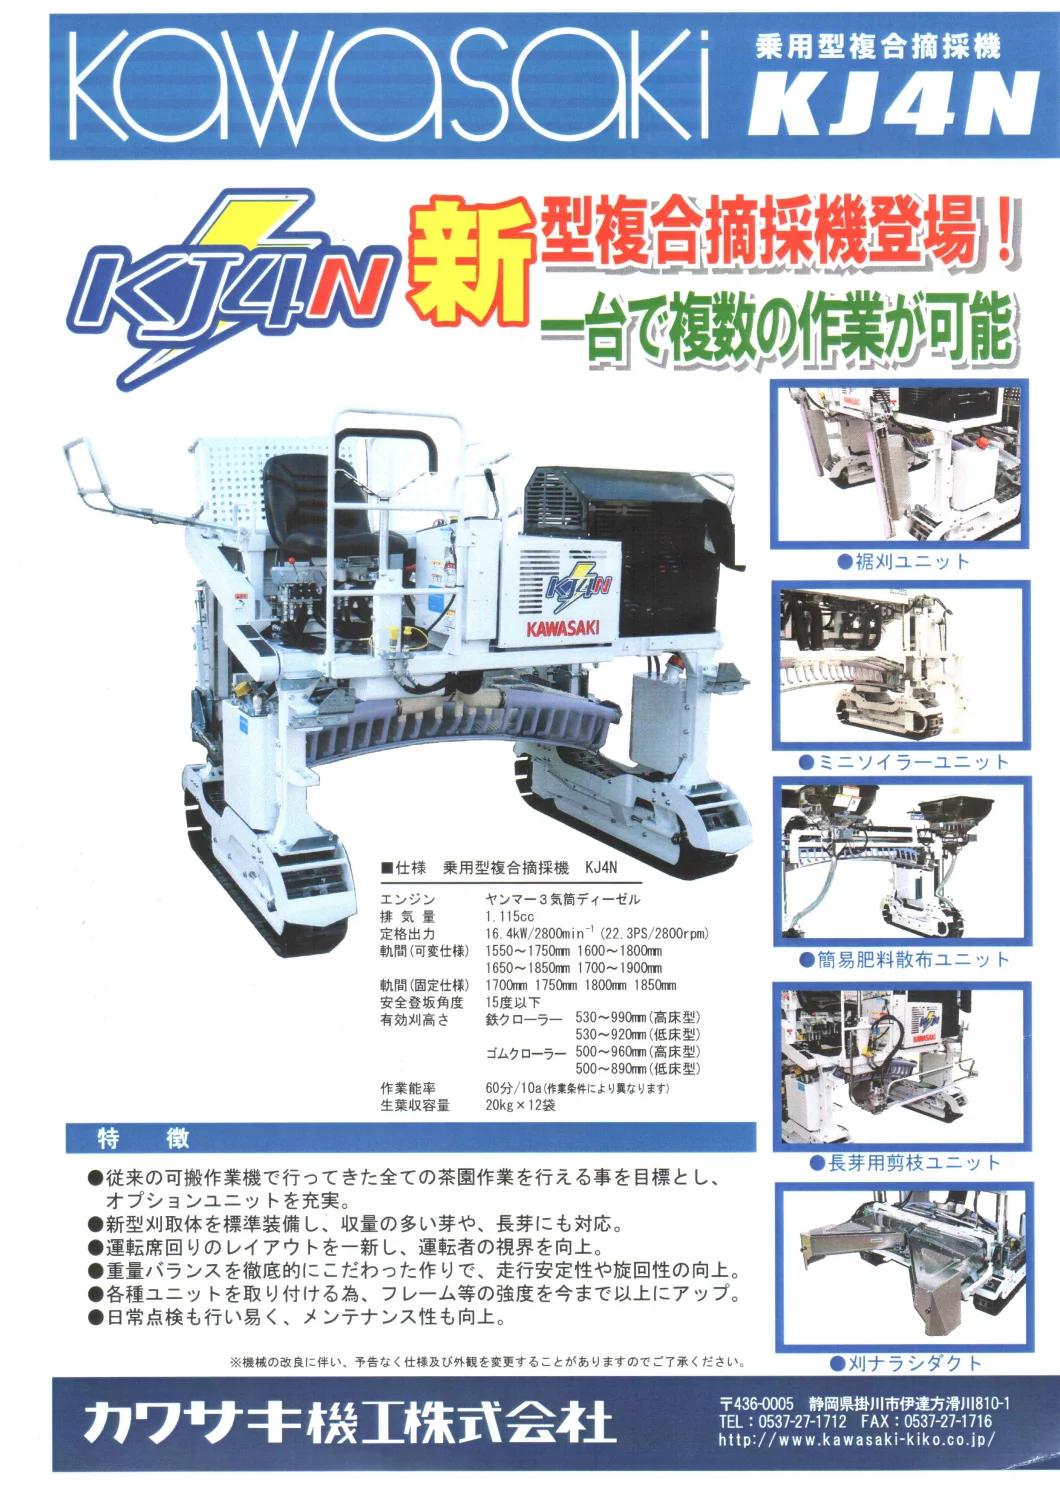 Kawasaki Riding Type Automatic Self-Propelled Tea Plucking-Trimming Machine Kj4n